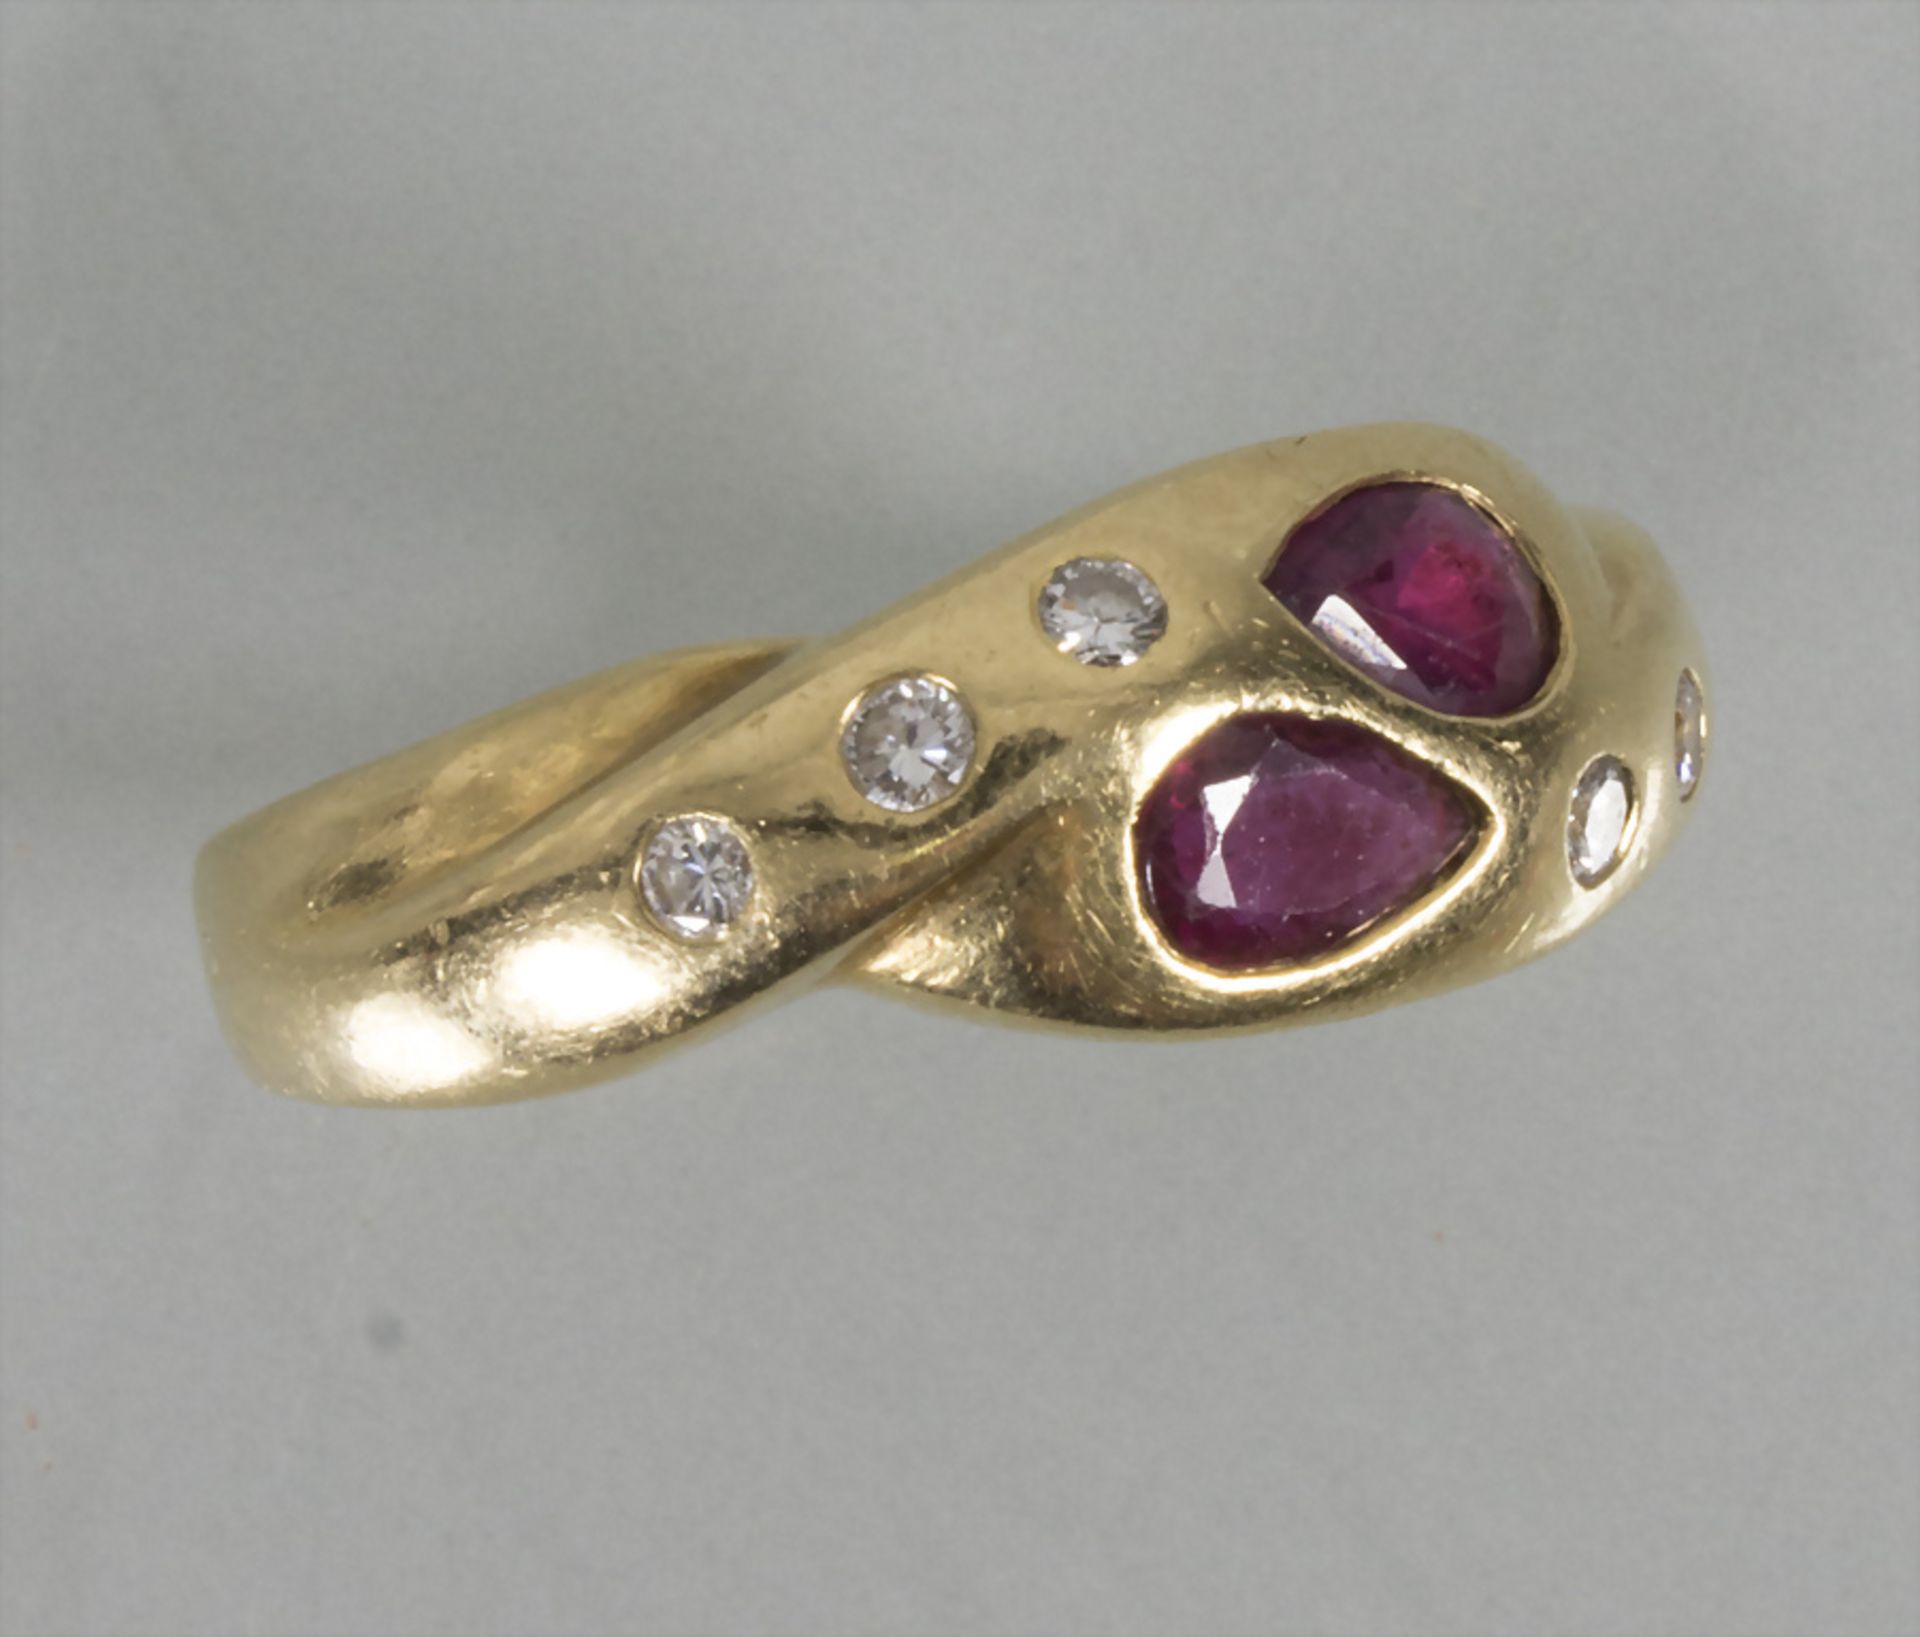 Damenring mit Diamanten und Rubinen / An 18 ct gold ring with diamonds and rubies